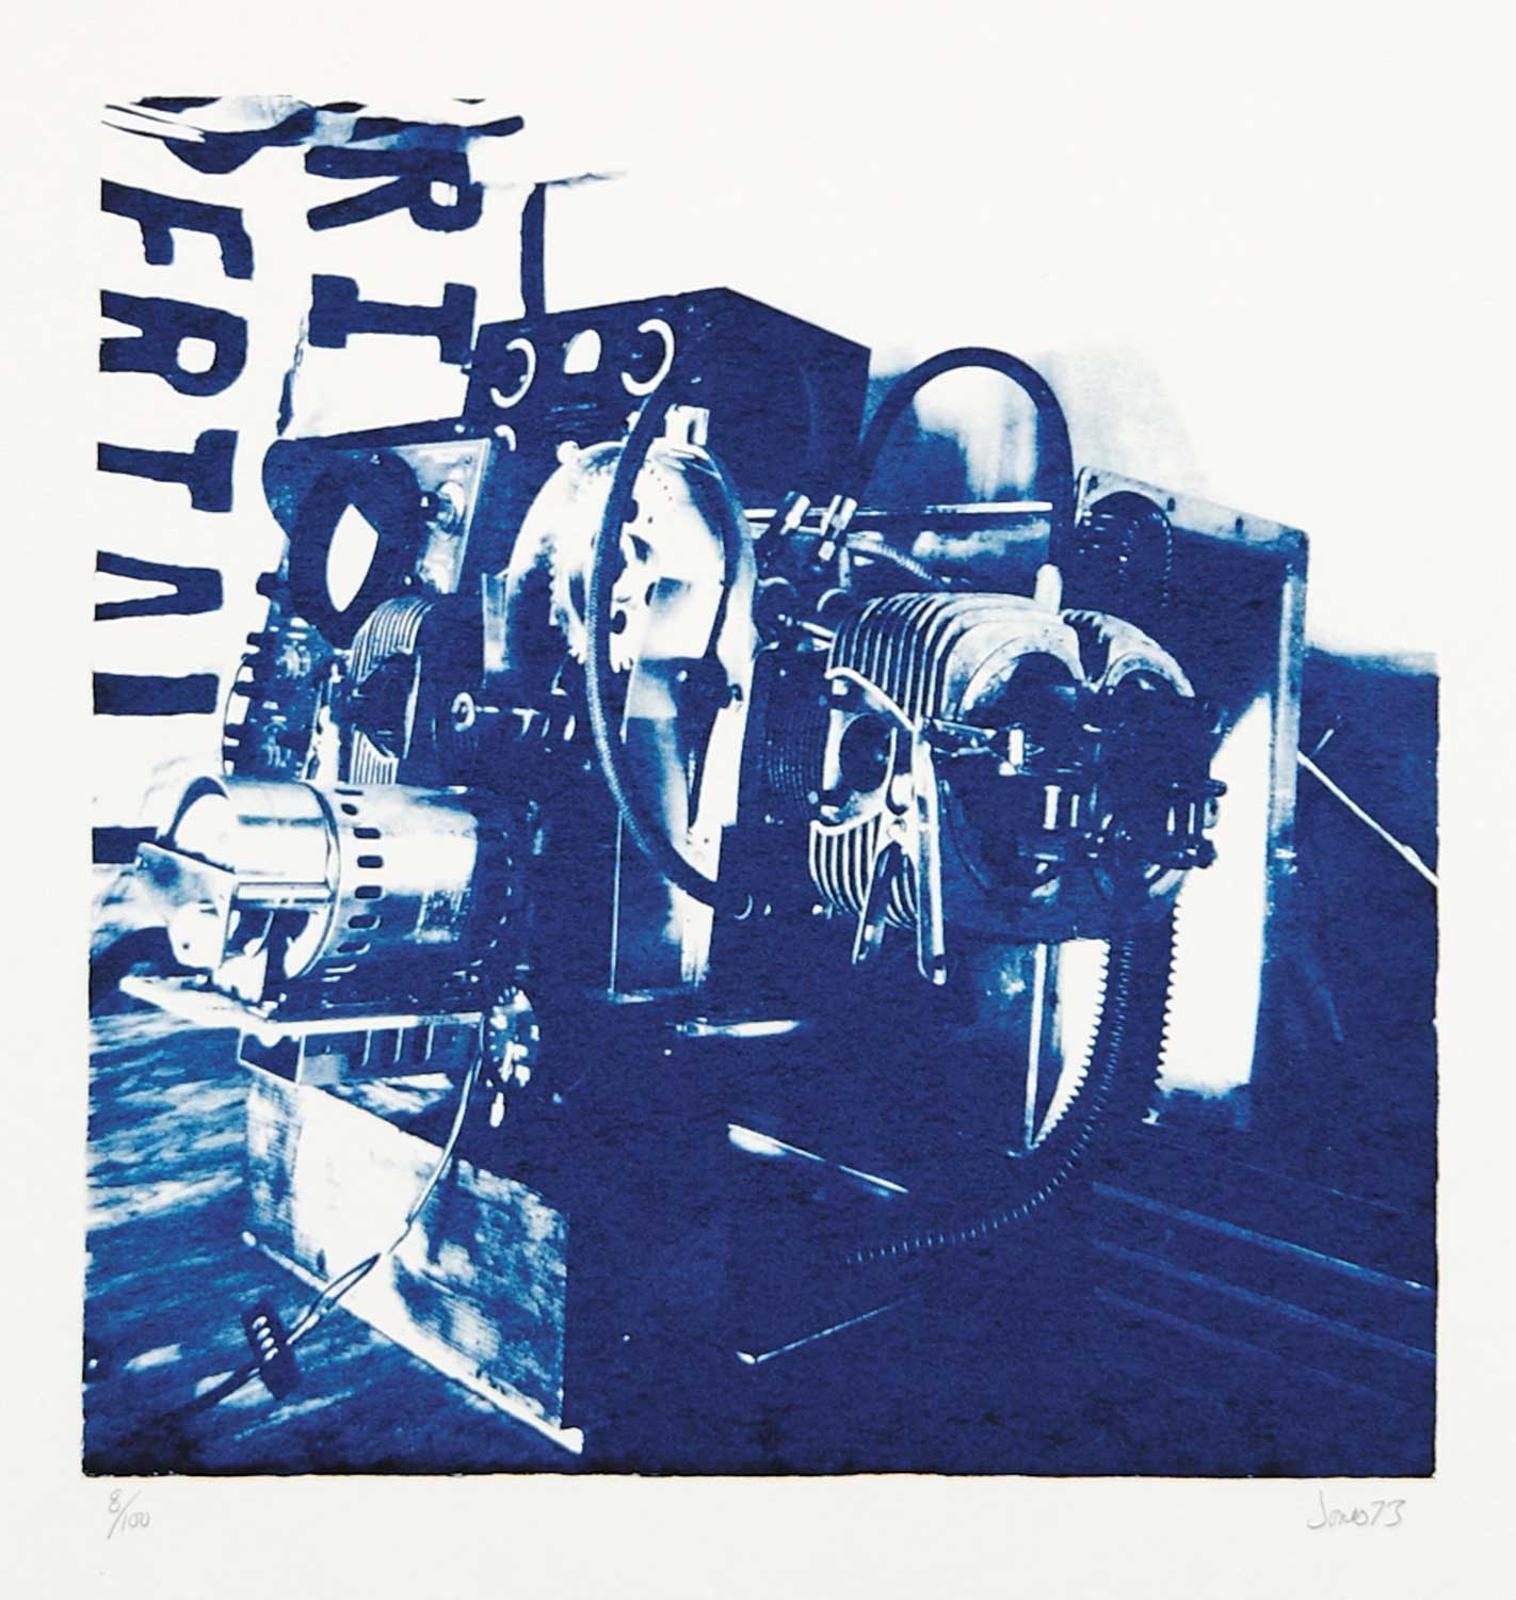 Jim Jones - Untitled - Blue Motor  #7/100